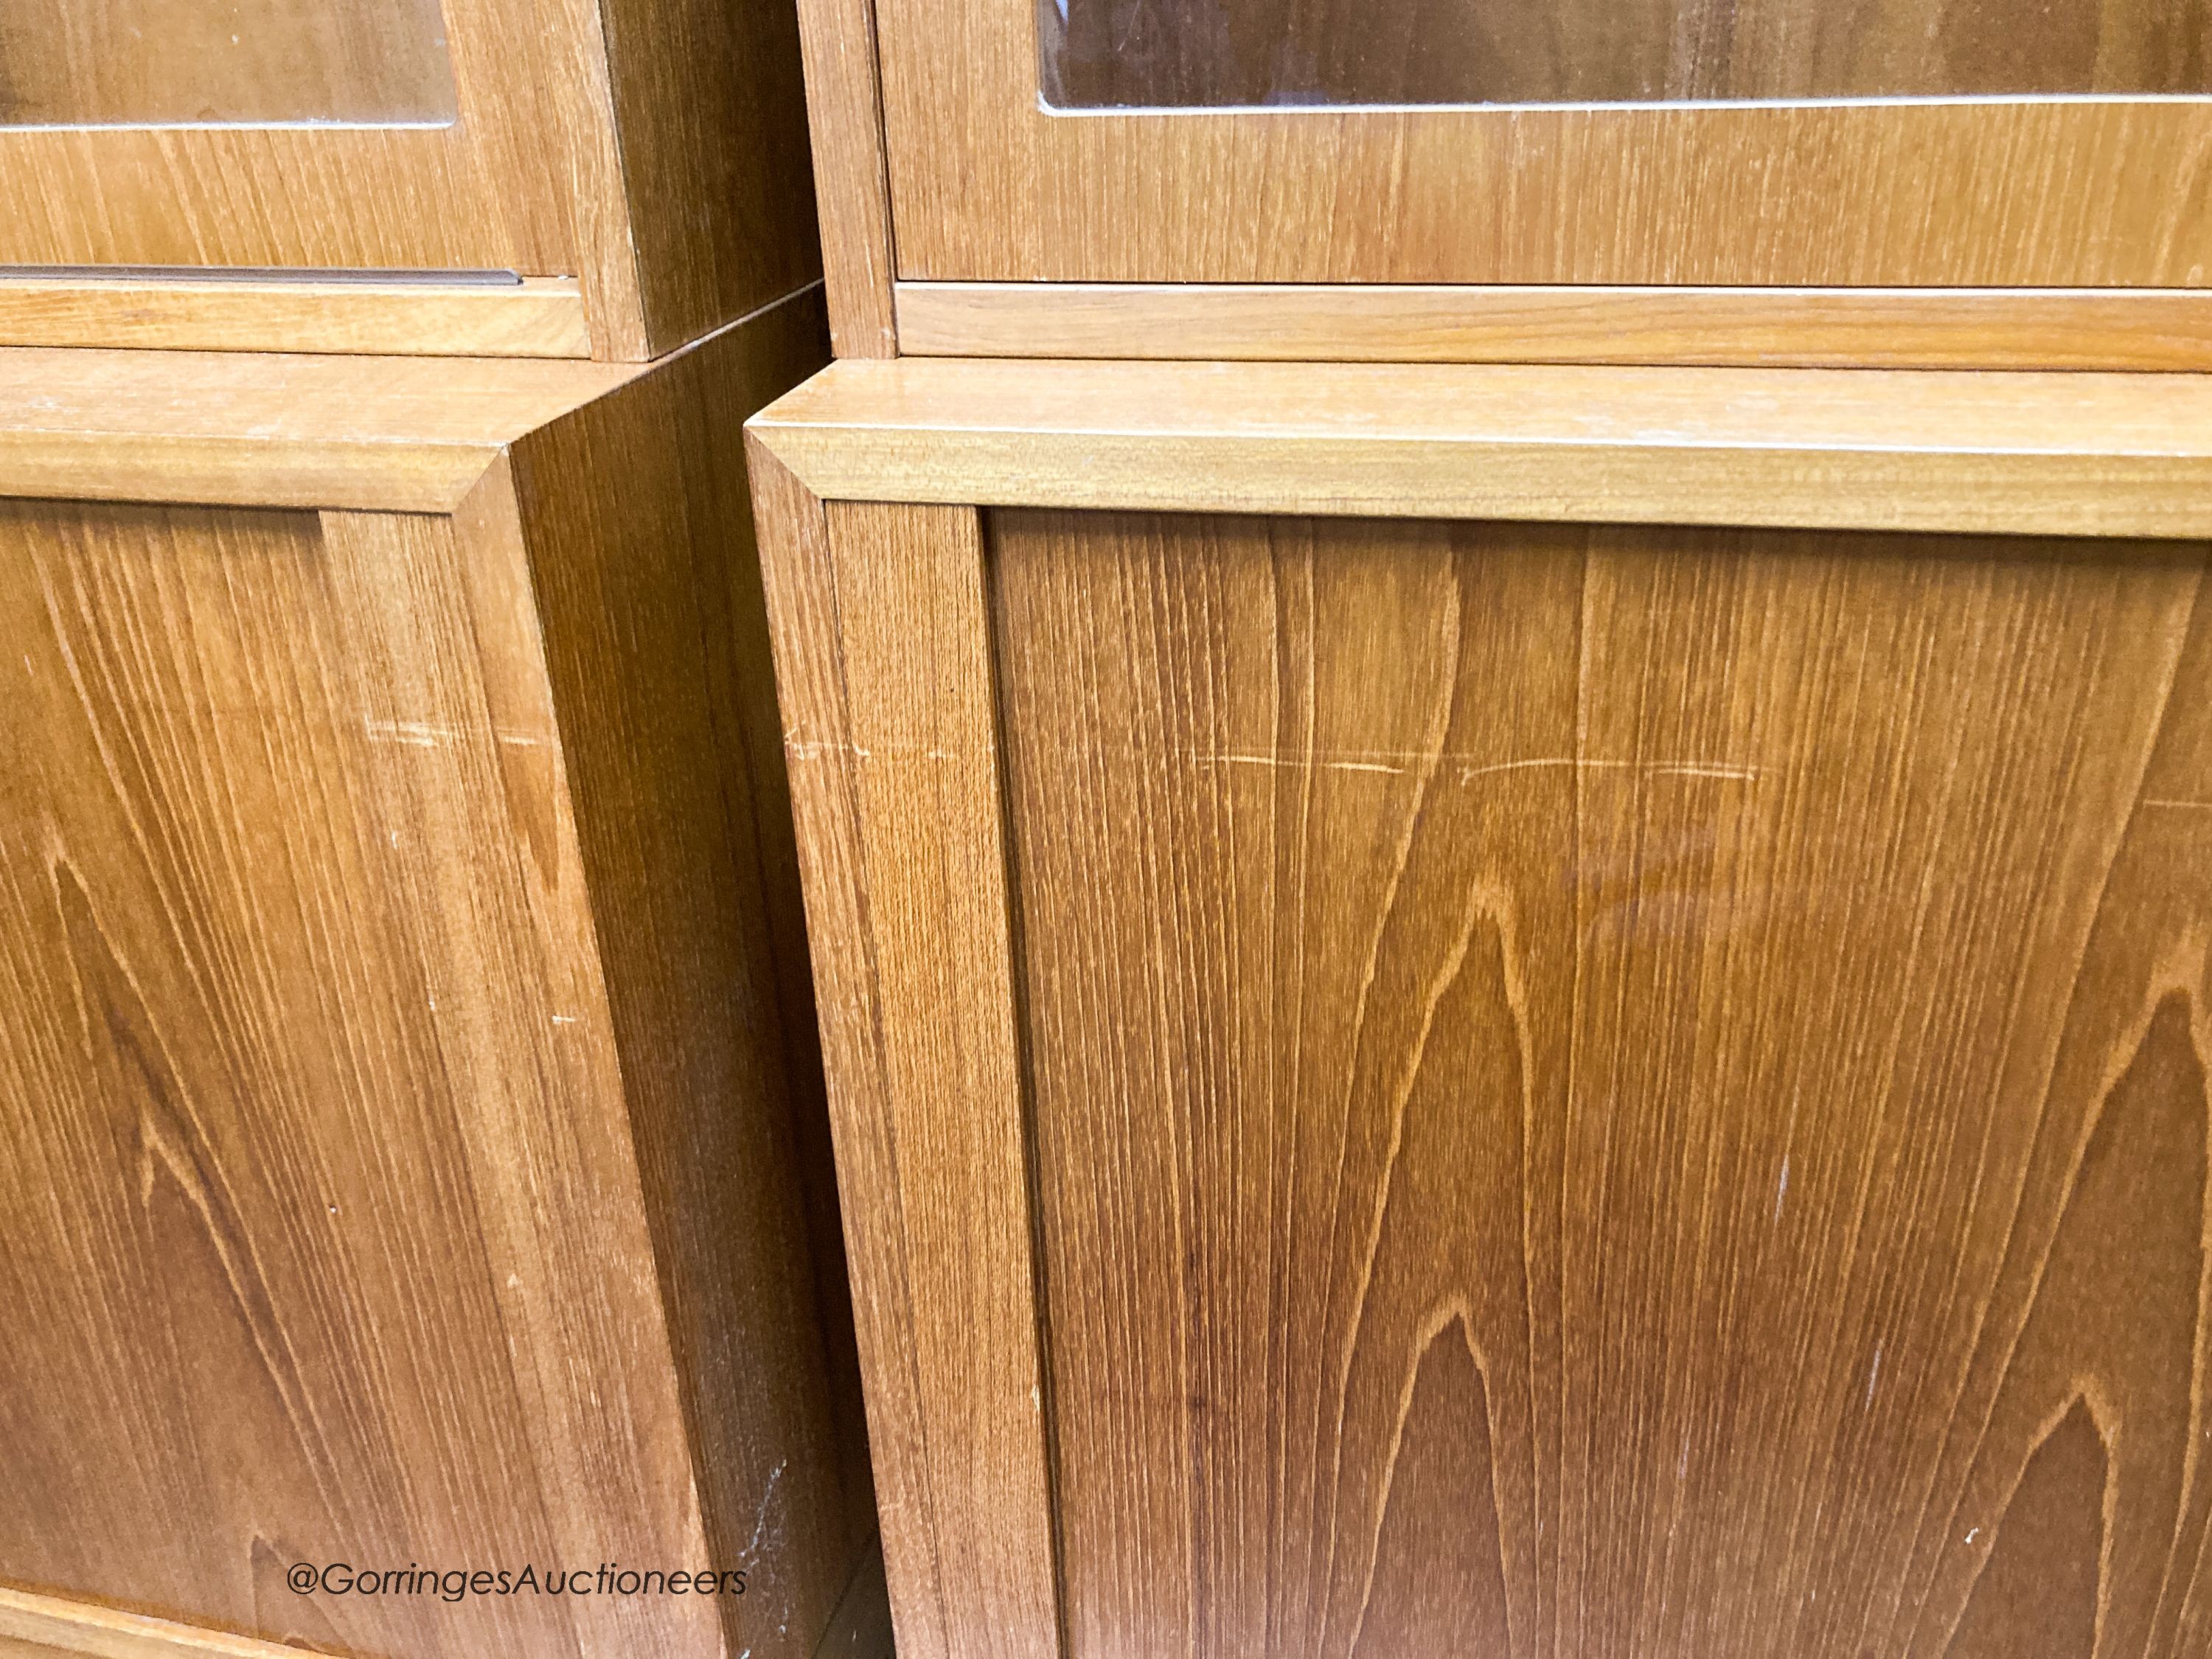 A pair of Harrods teak display cabinets, width 108cm, depth 43cm, height 196cm